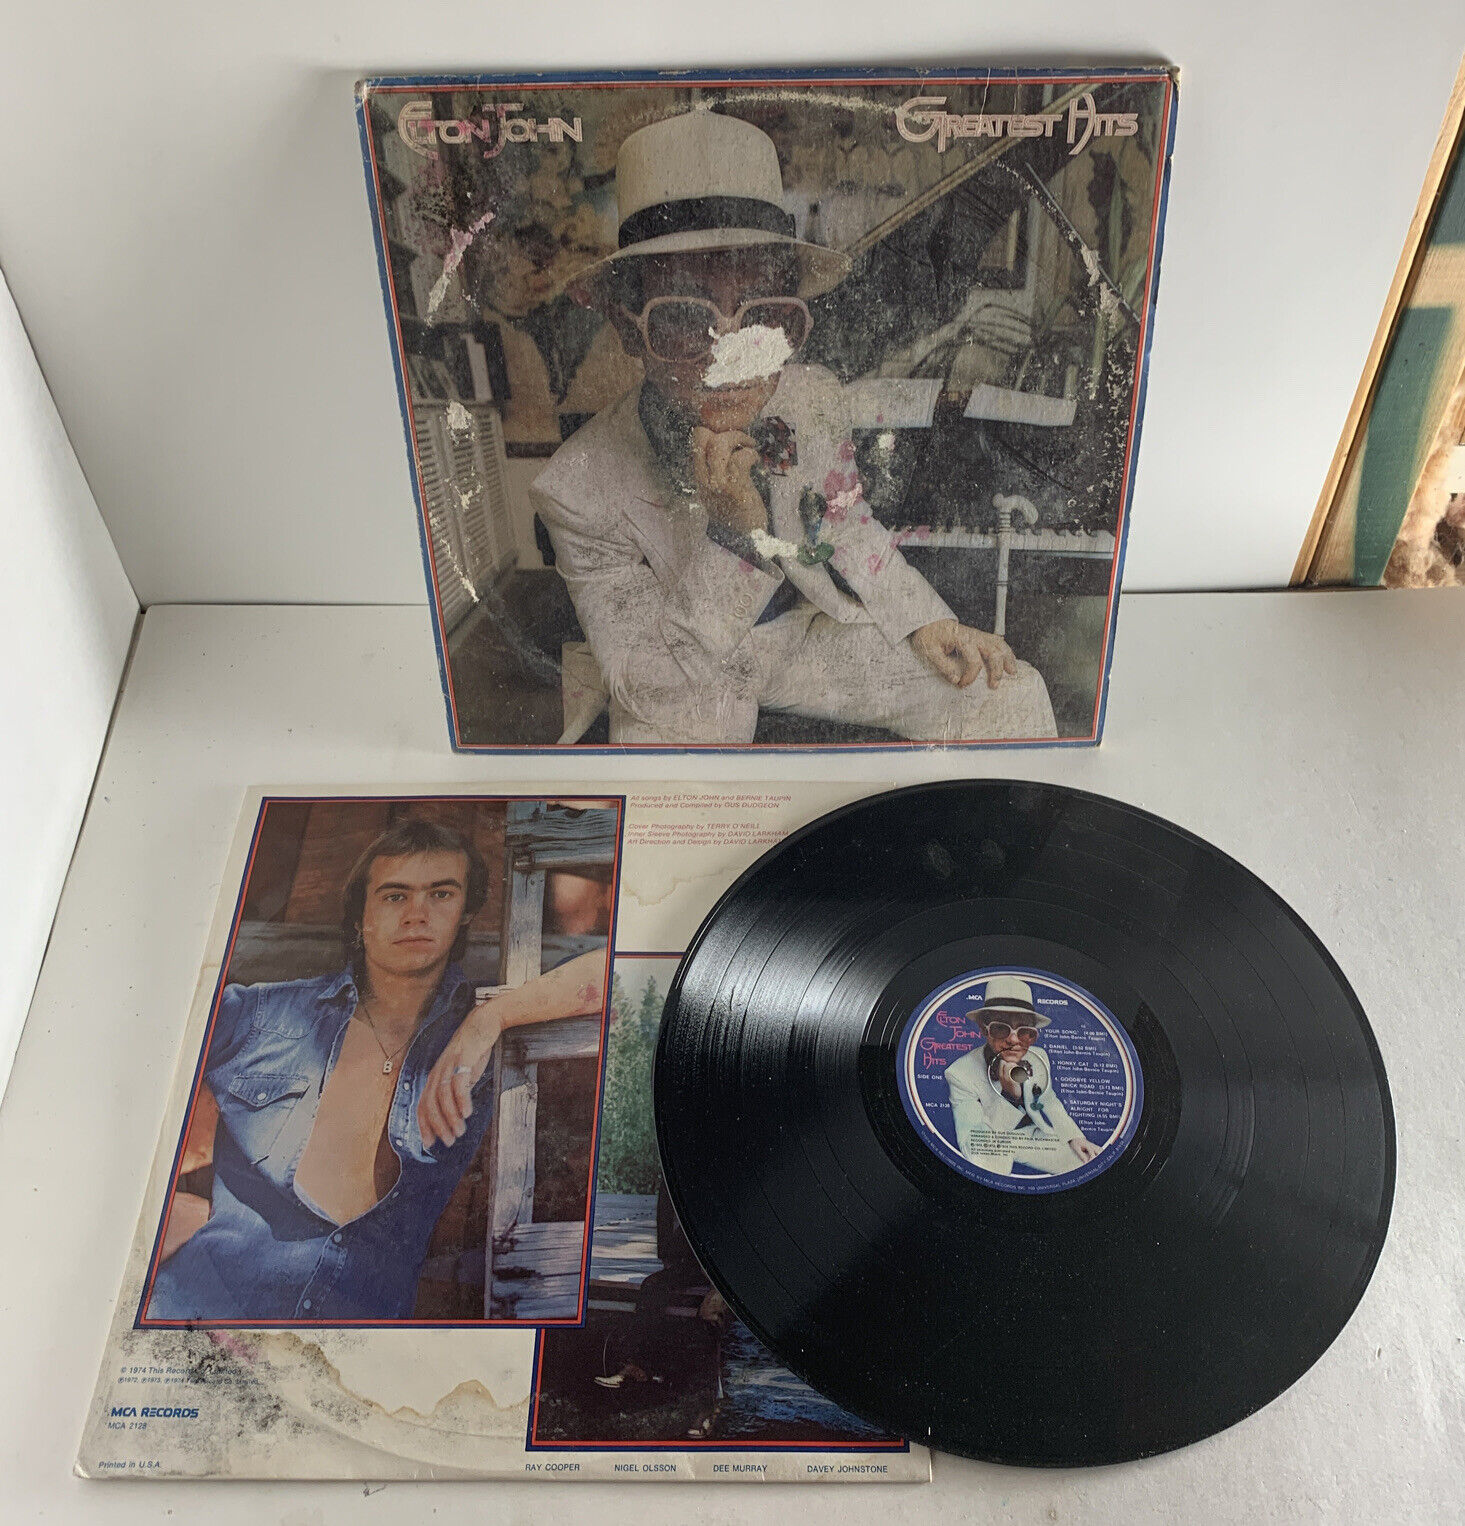 ELTON JOHN Vintage 1974 Vinyl Record GREATEST HITS Album With Insert